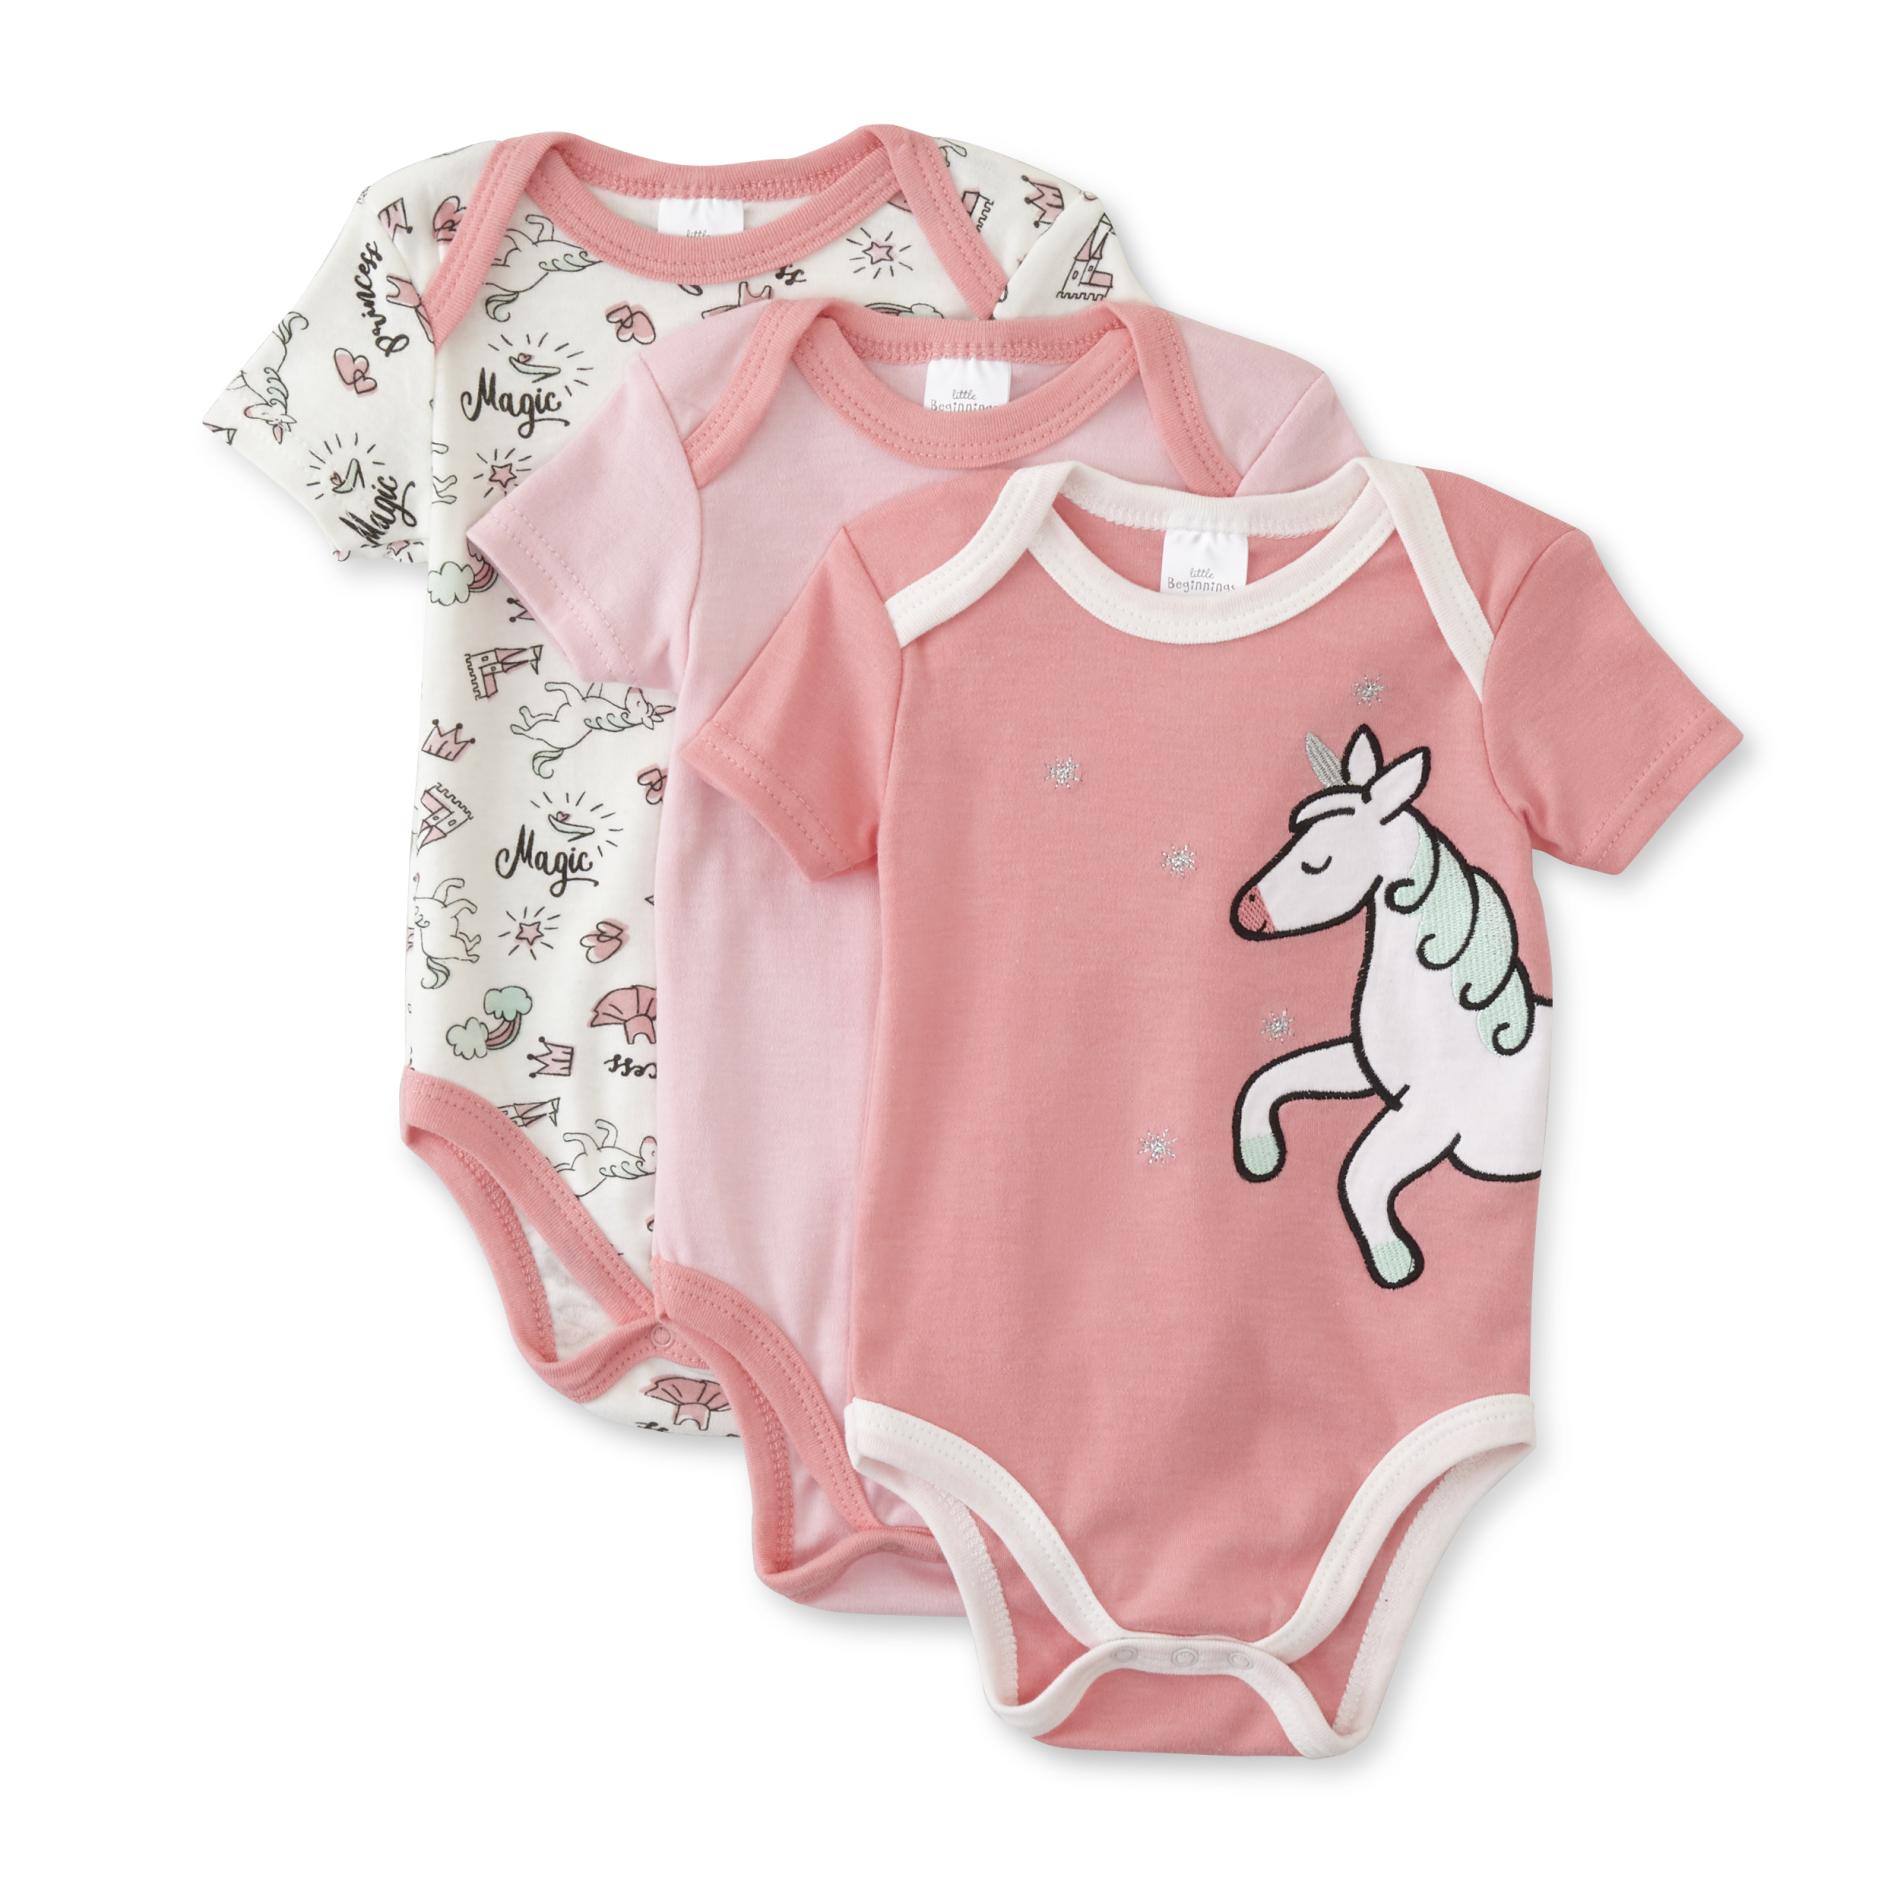 Cudlie Infant Girls' 3-Pack Bodysuits - Unicorn